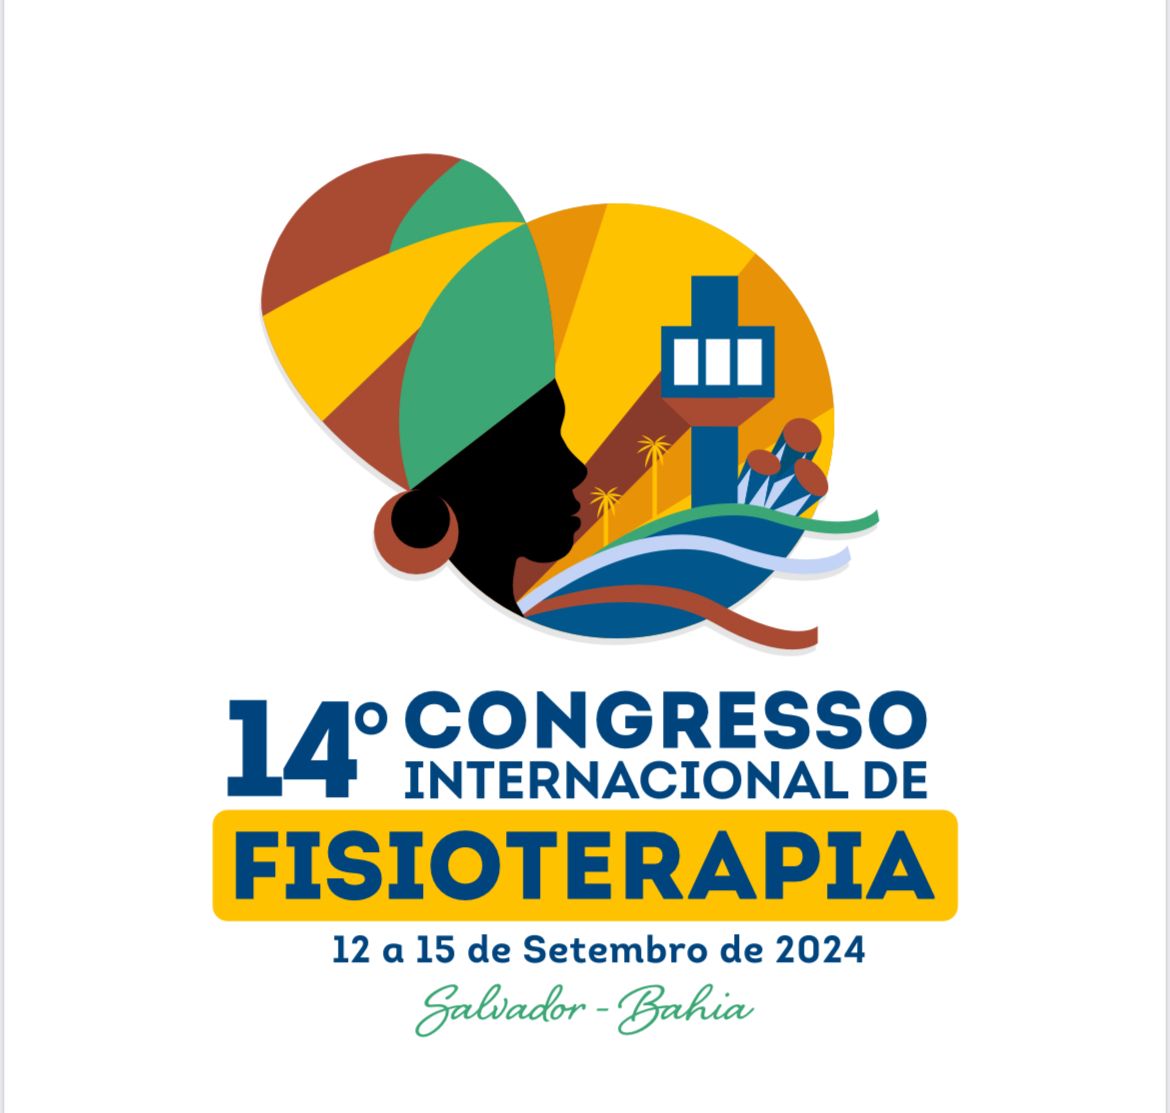 14º CONGRESSO INTERNACIONAL DE FISIOTERAPIA 